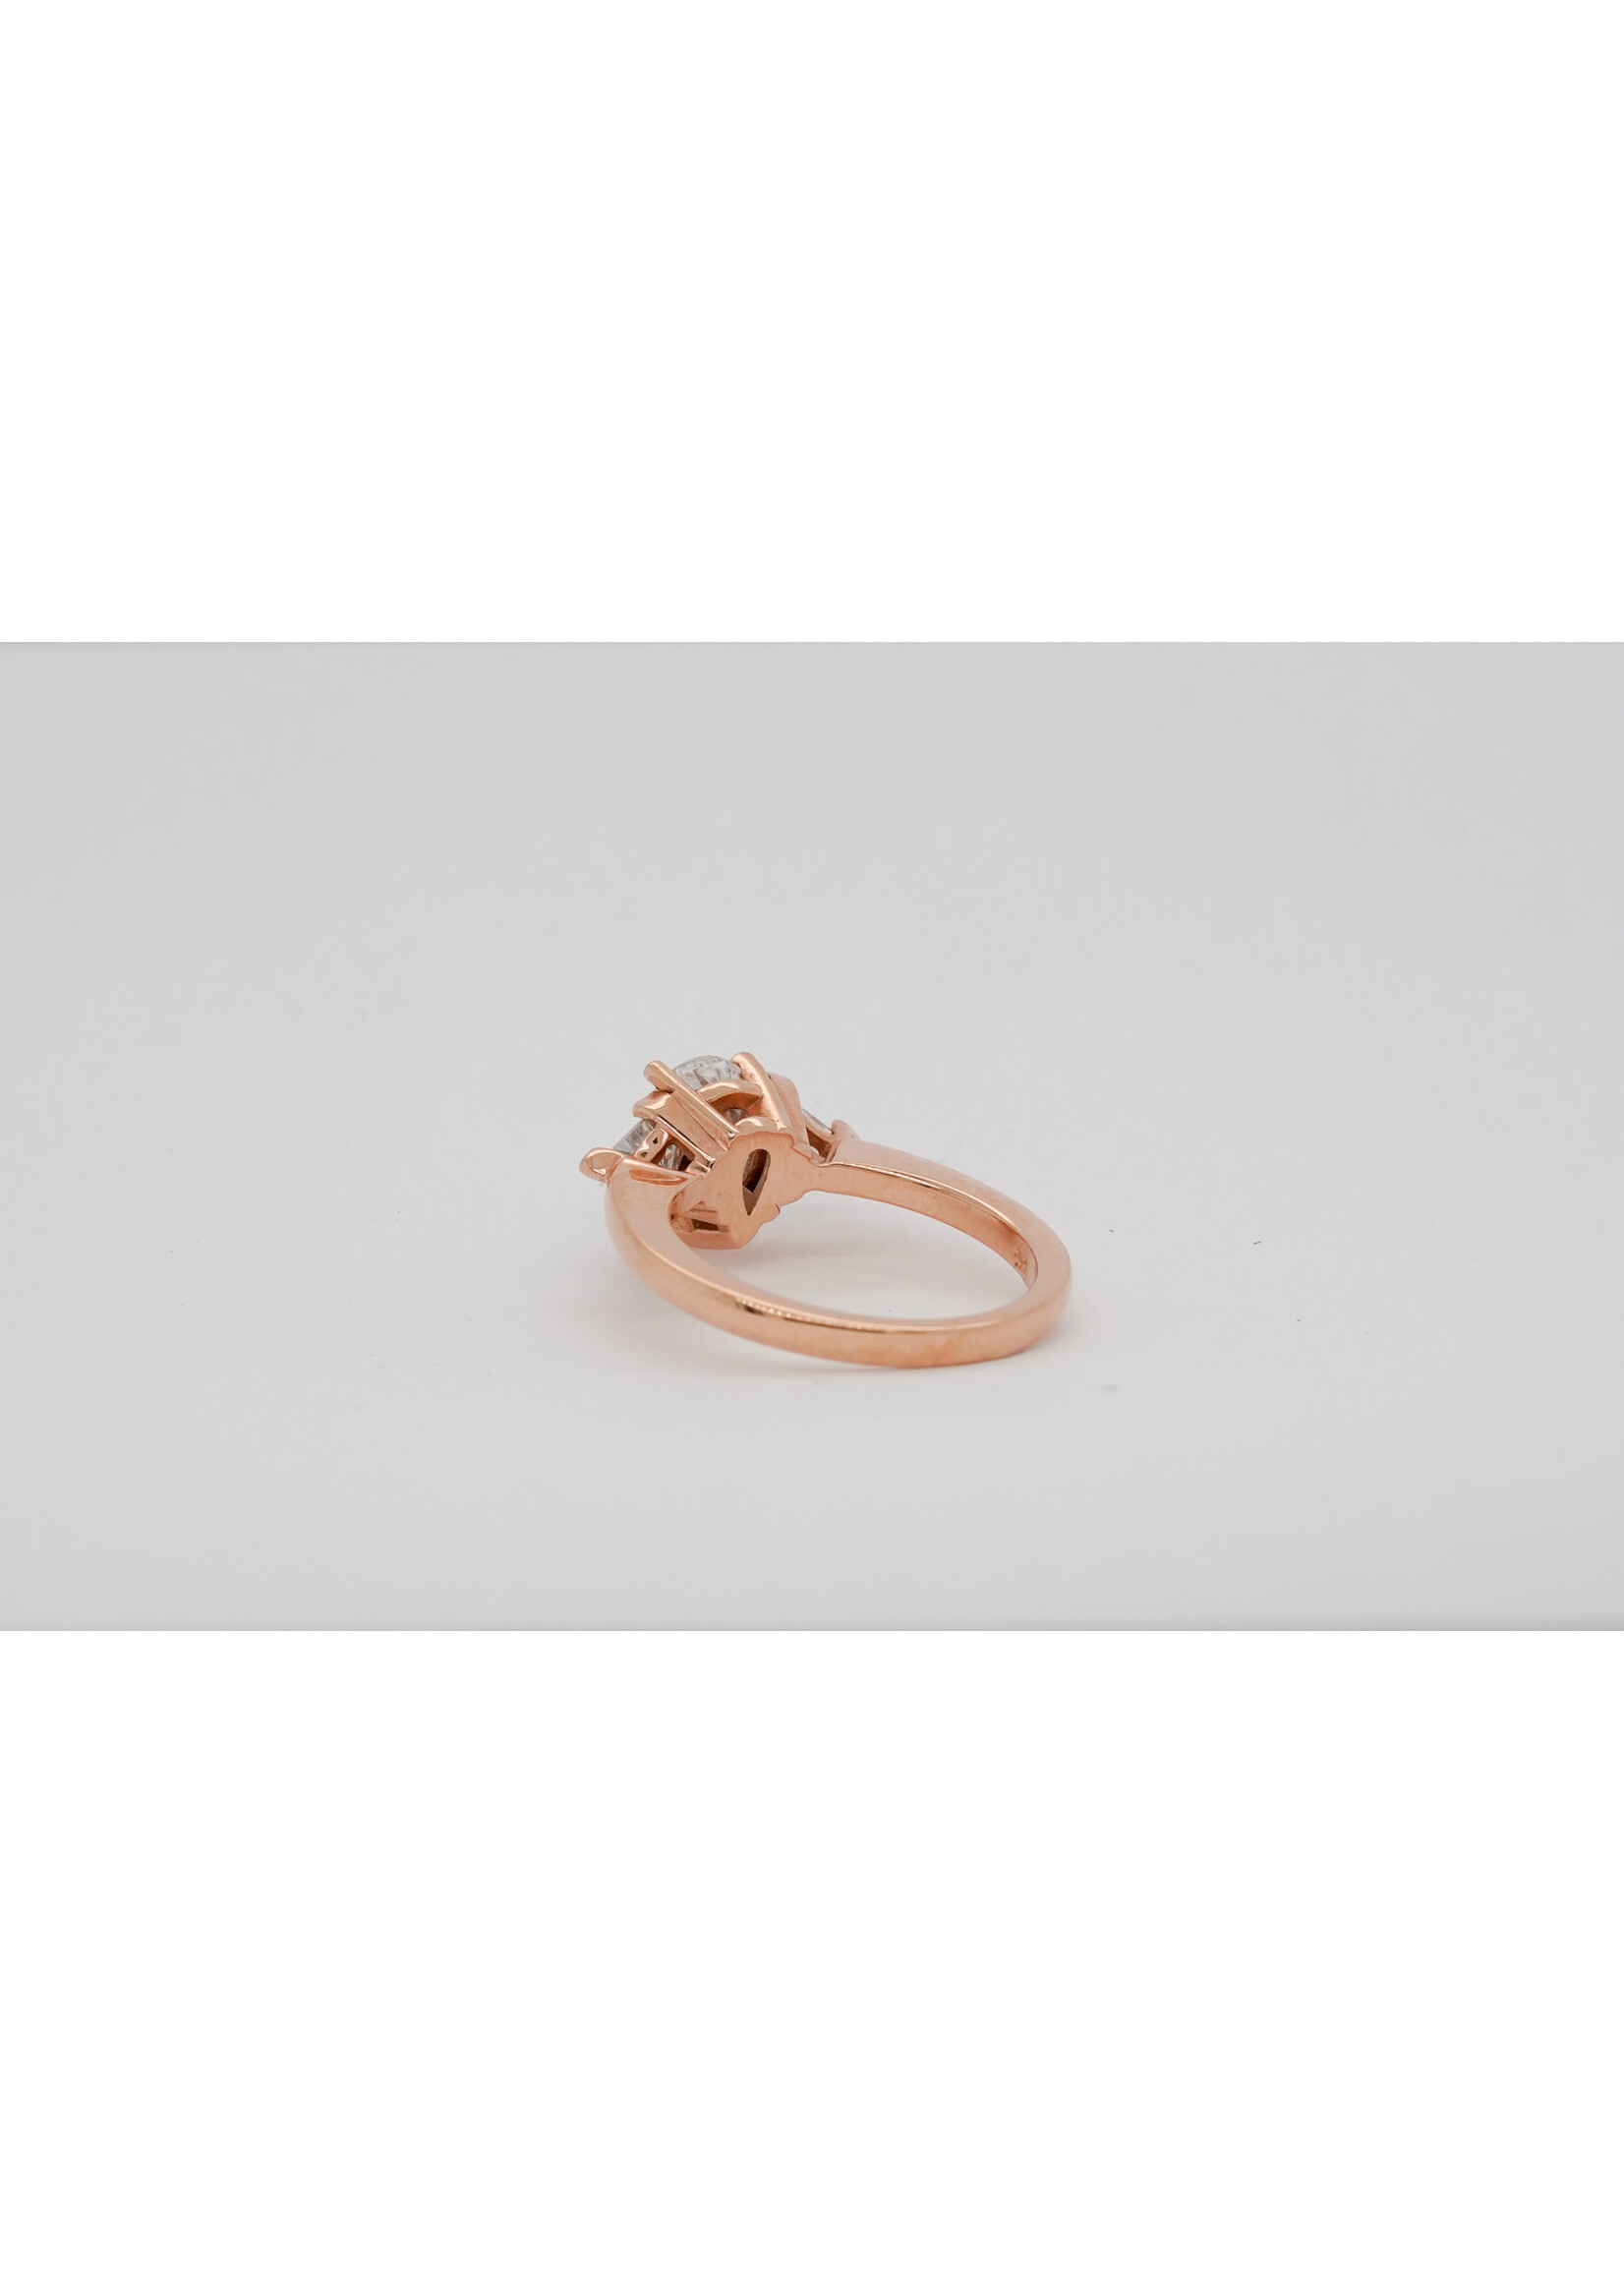 14KR 3.22g 2.10ctw (1.21ctr) H/SI1 Pear Diamond Three Stone Engagement Ring (size 6)